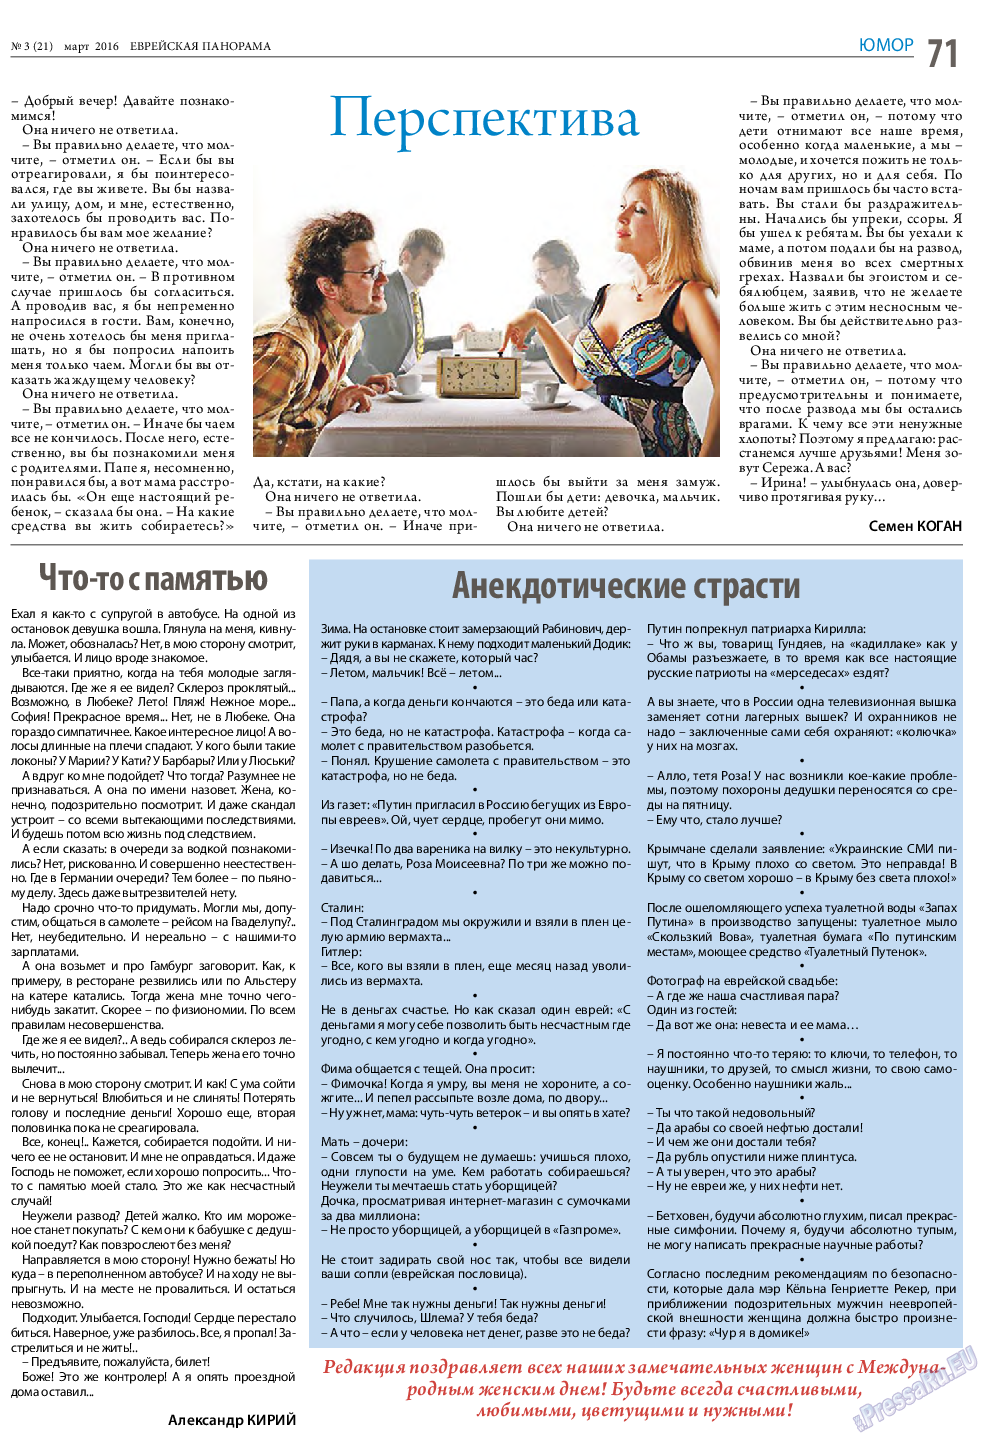 Еврейская панорама, газета. 2016 №3 стр.71